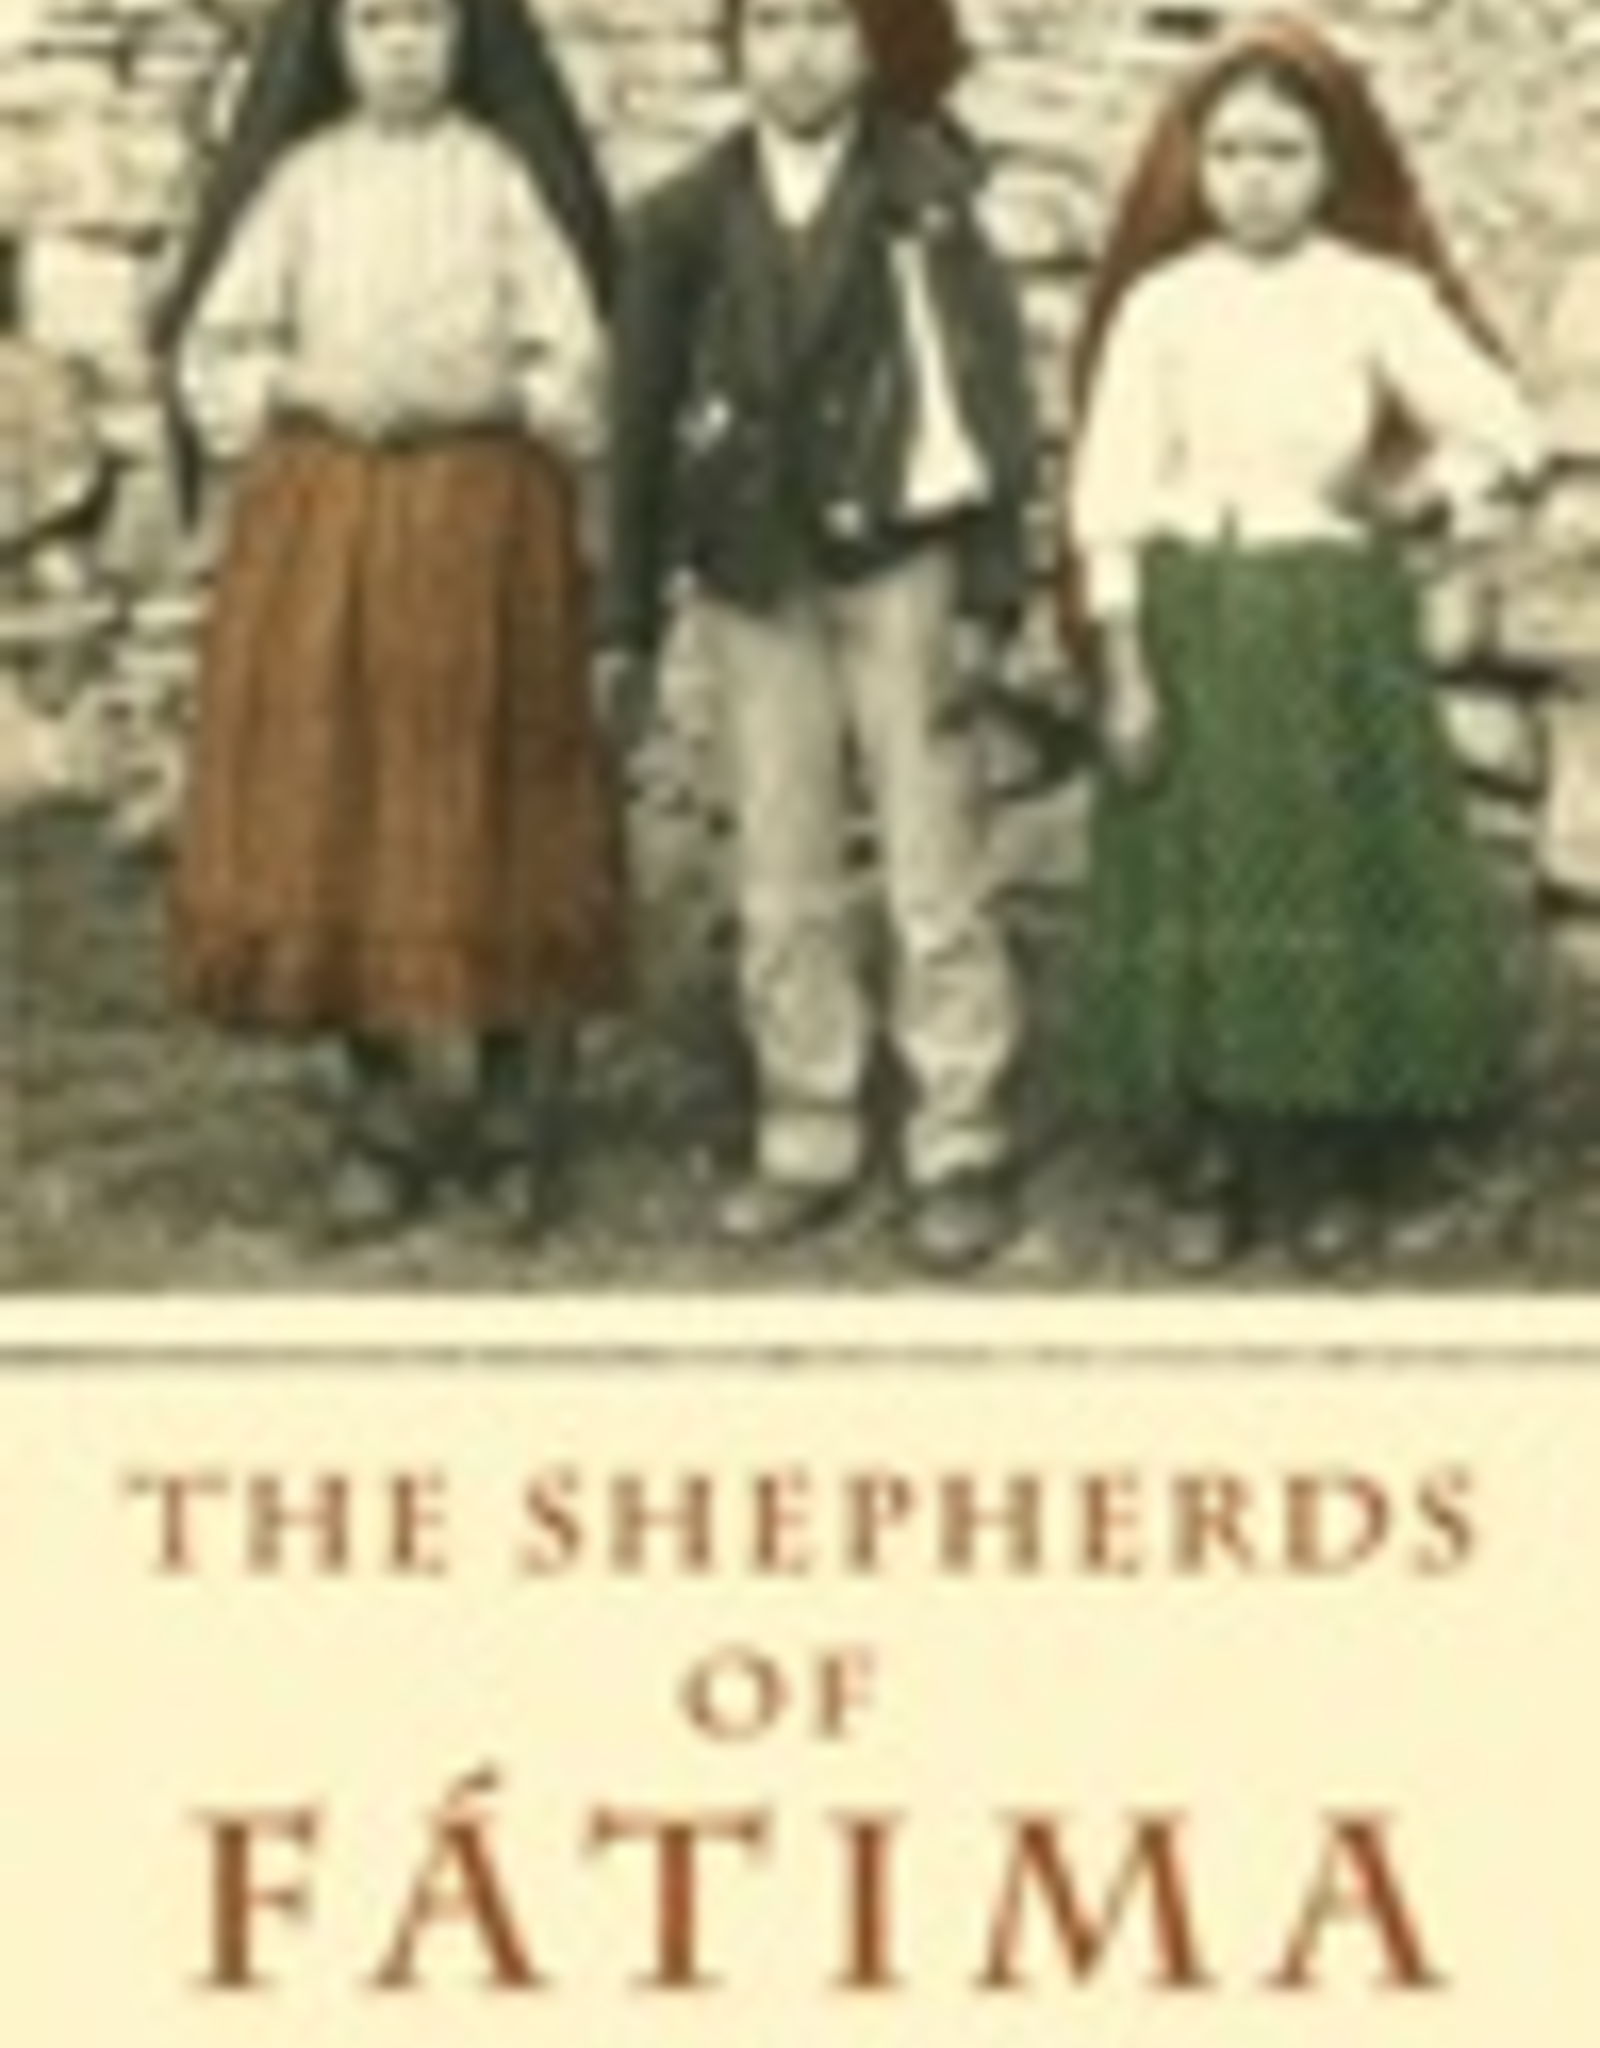 Pauline Sheperds of Fatima, by M. Fernando Silva (paperback)